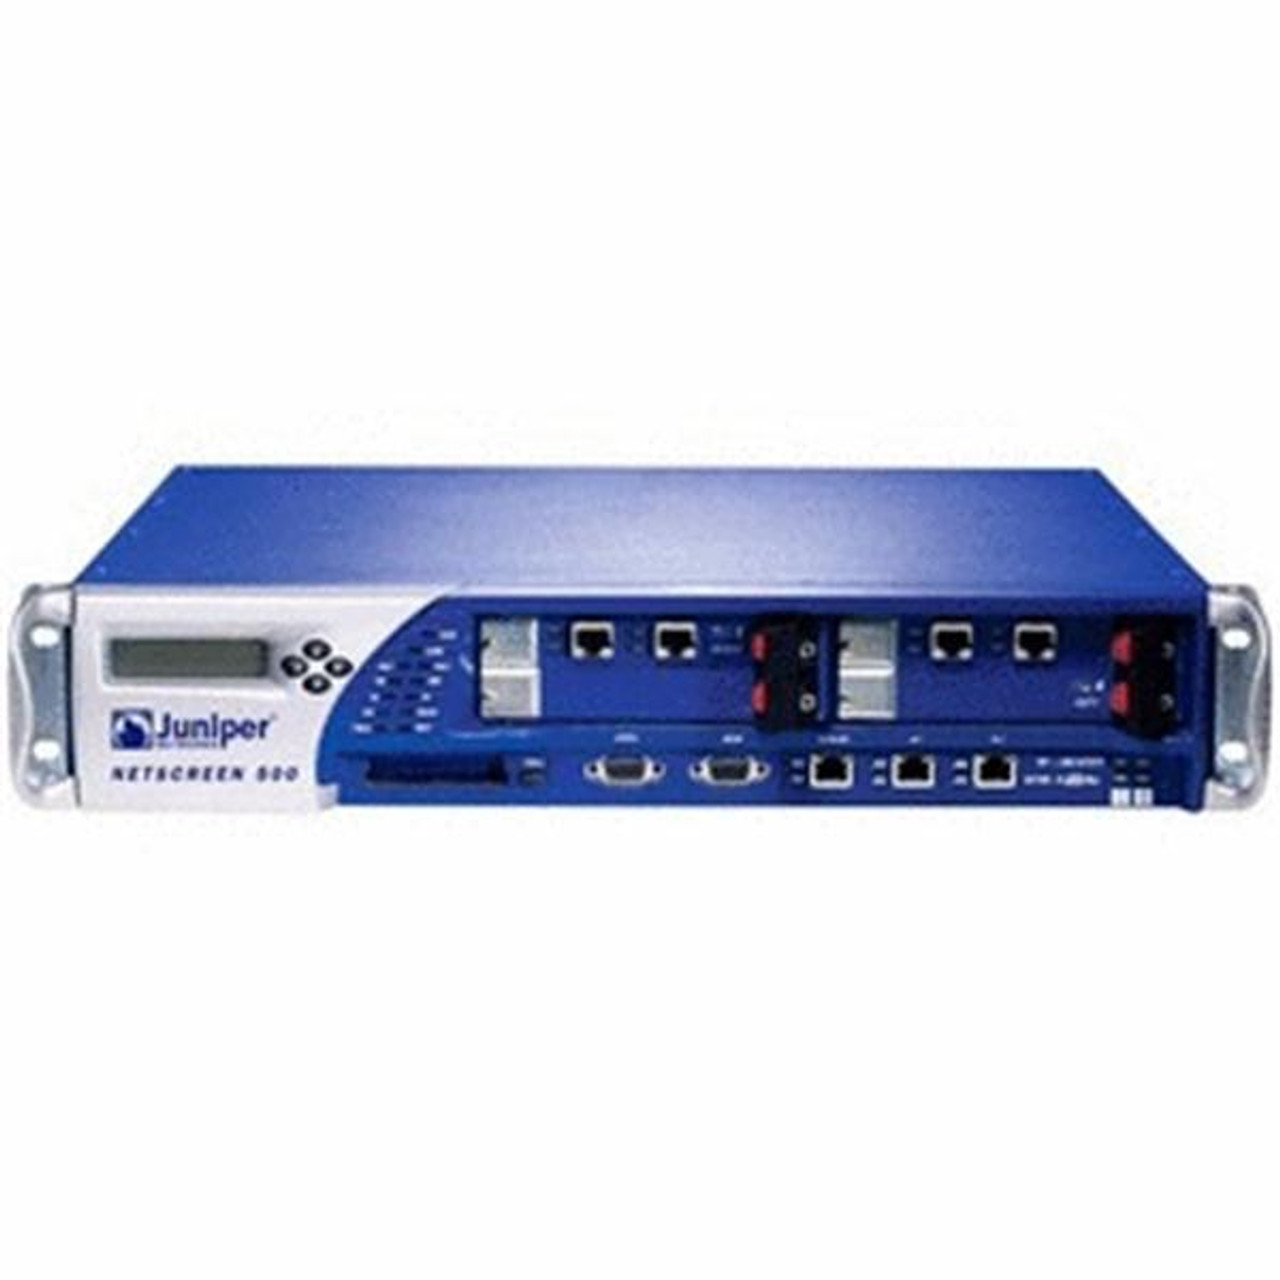 NS-500-HF2 Juniper NetScreen-500 I/O Module Dual Port 10/100 Fast Ethernet (Refurbished)